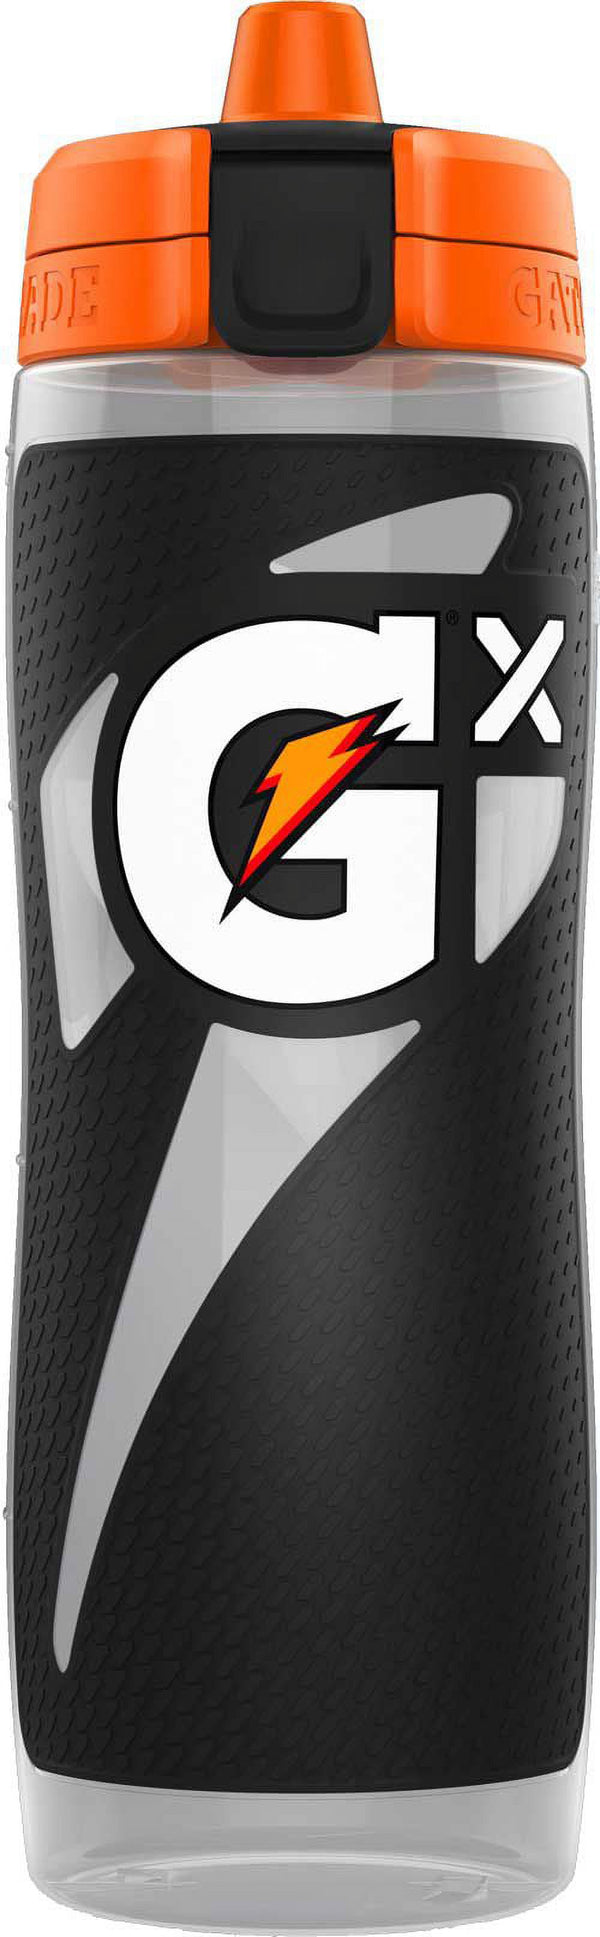 Gatorade Gx Hydration System, Non-Slip 30oz Squeeze Bottle - White